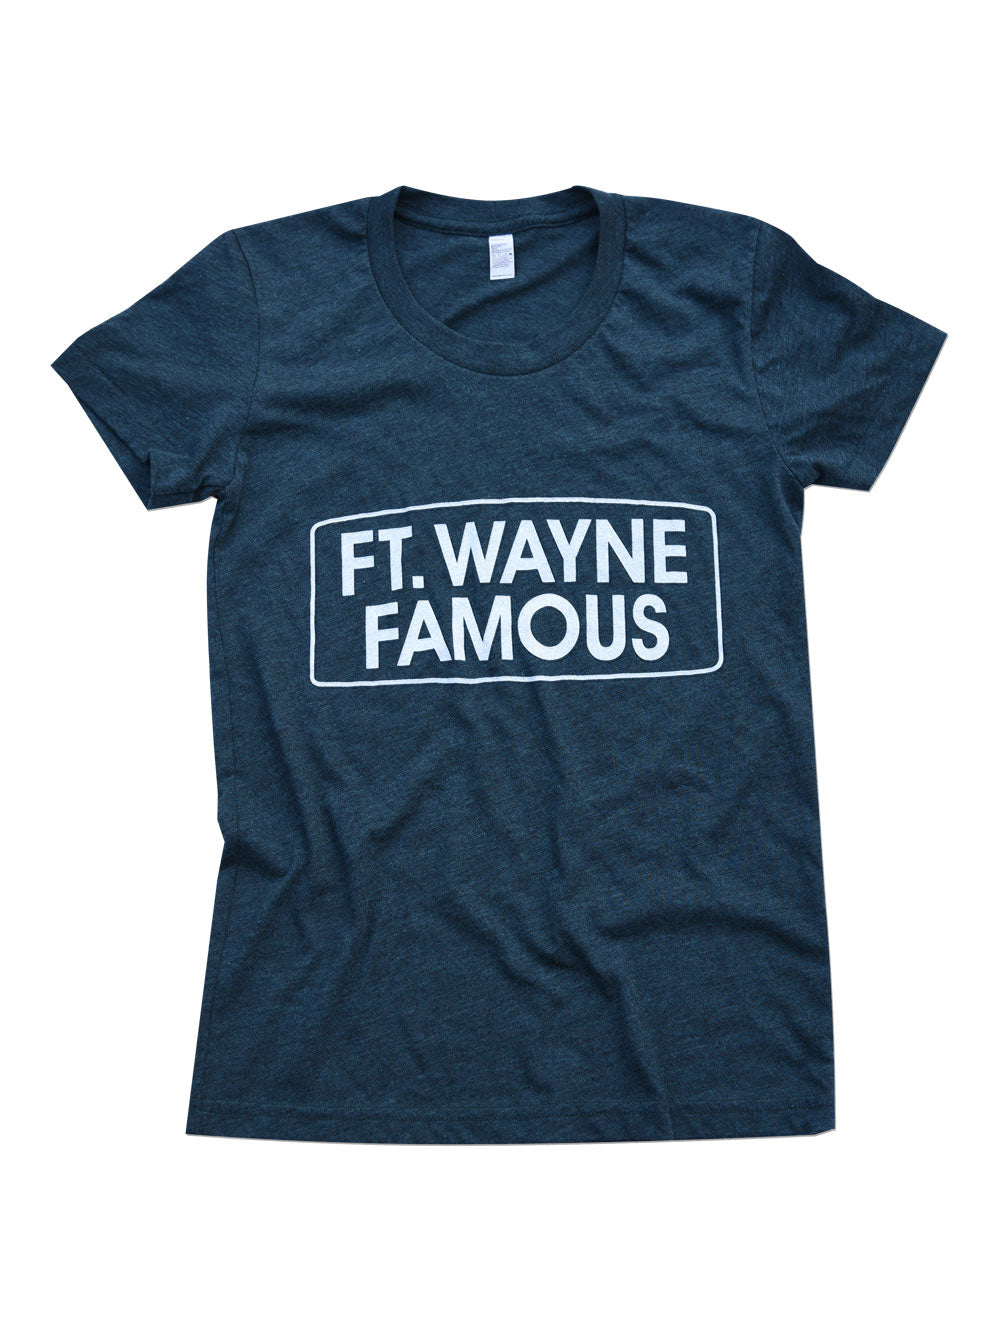 Fort Wayne Famous black aqua heather t-shirt